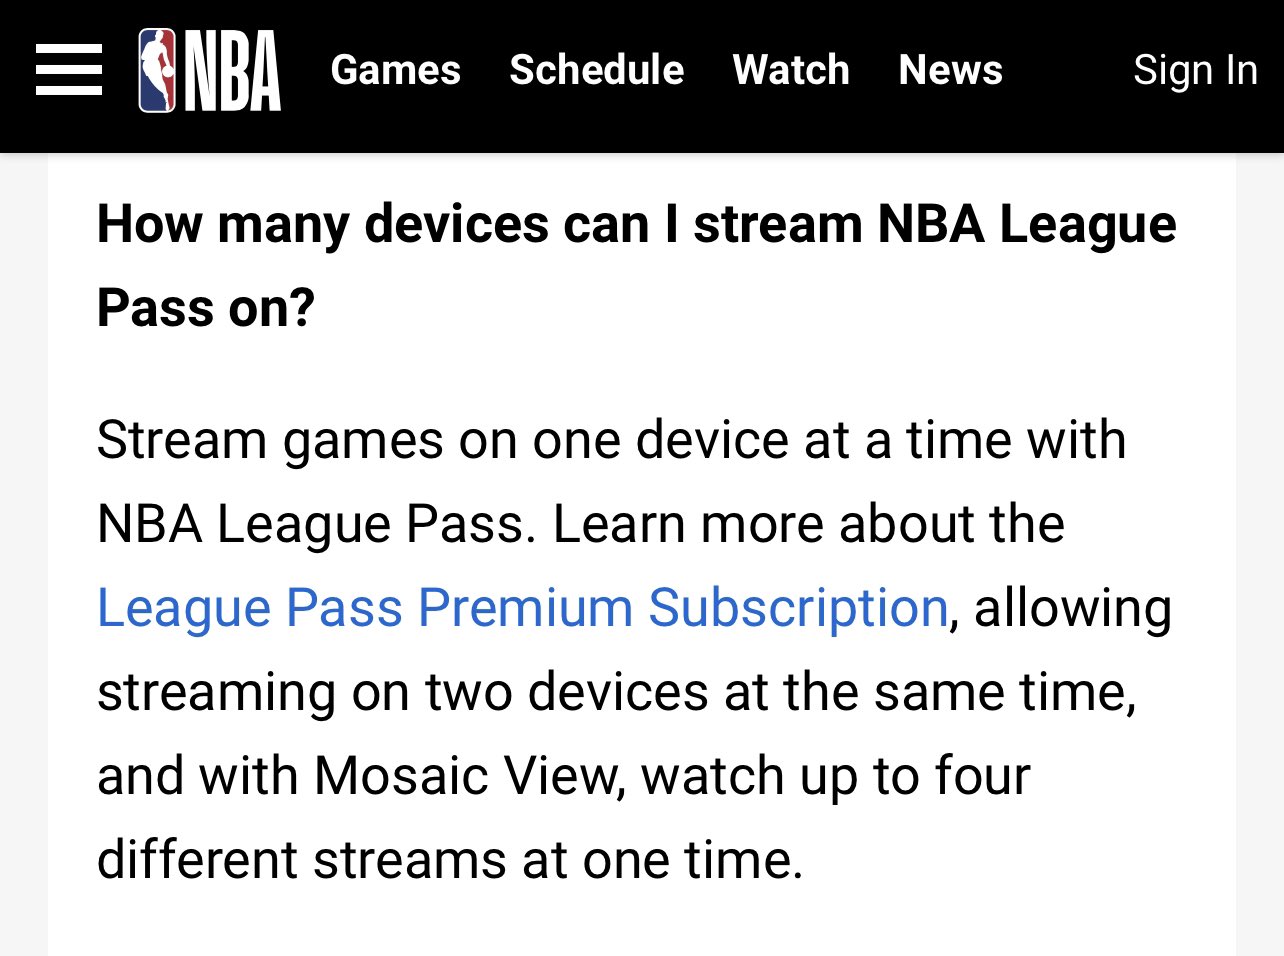 nba league pass one device